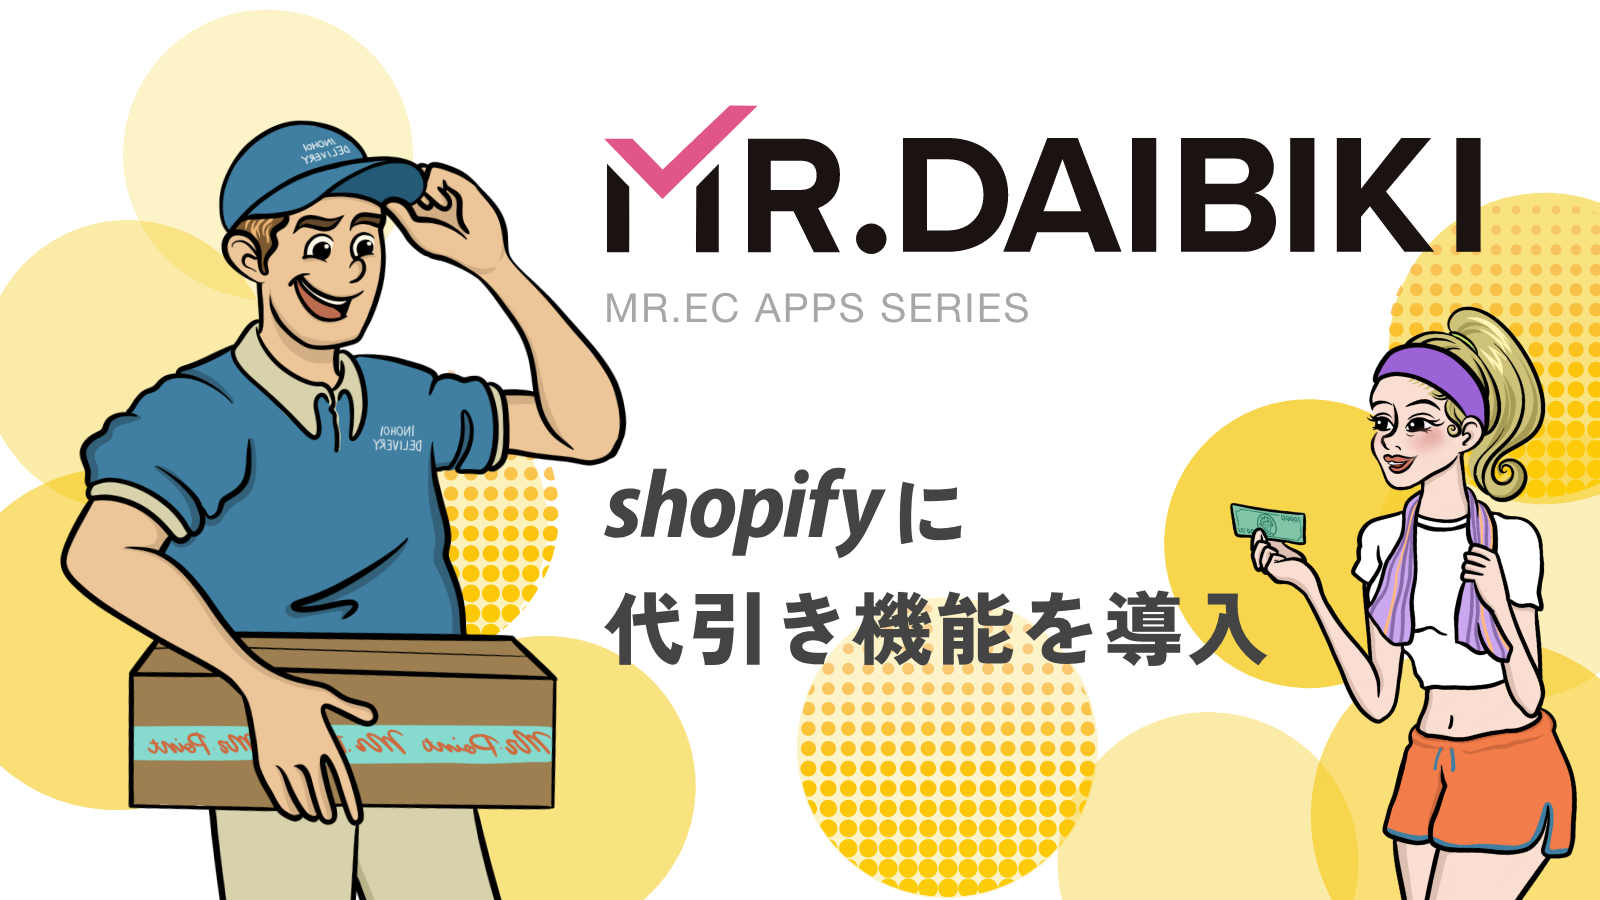 MR.DAIBIKI 代引き手数料を計算するShopifyアプリ